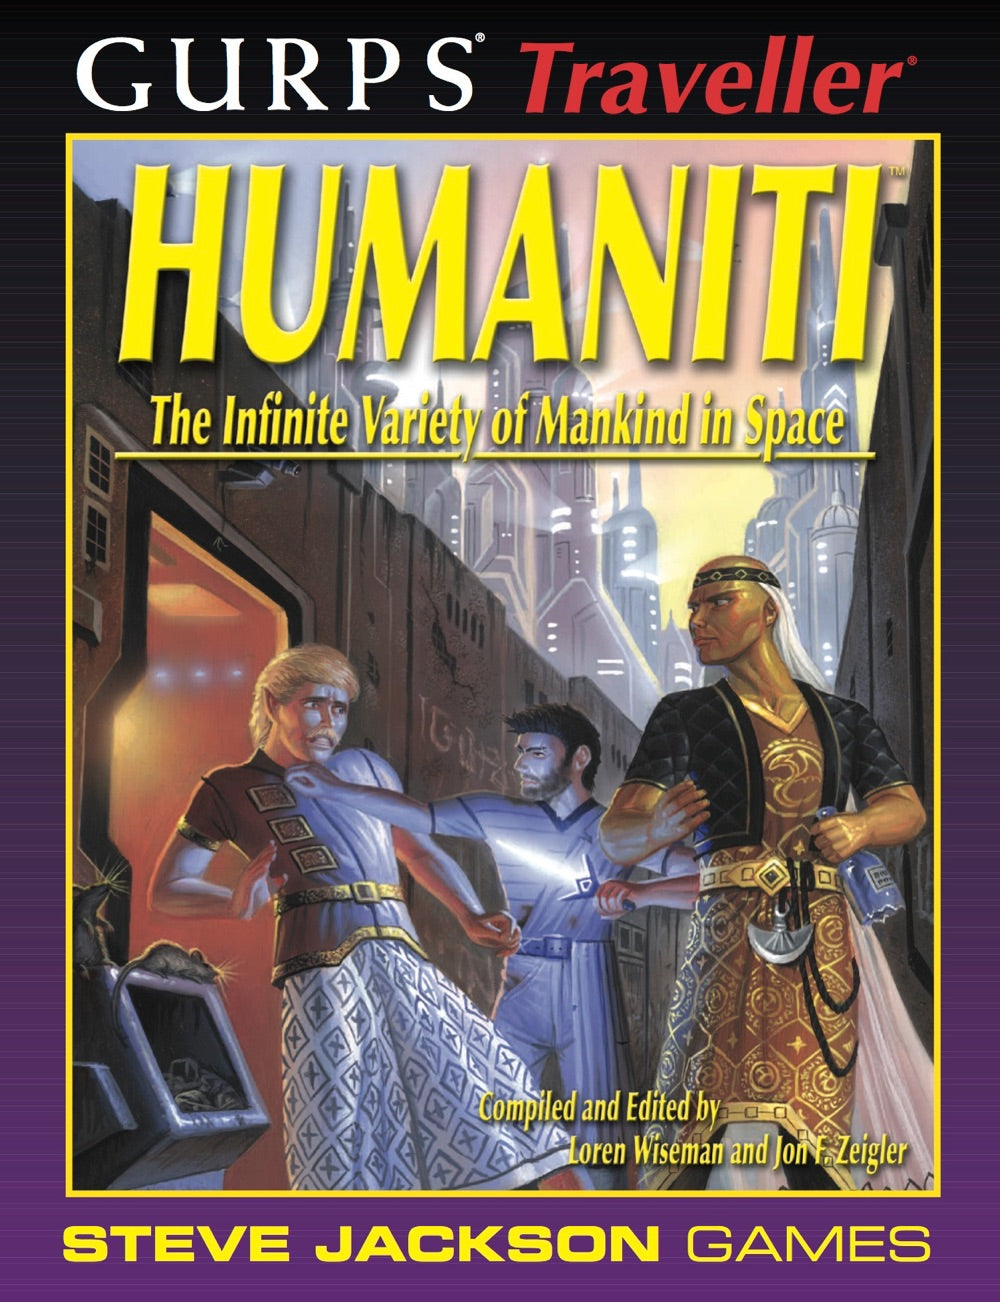 GURPS Traveller Classic: Humaniti